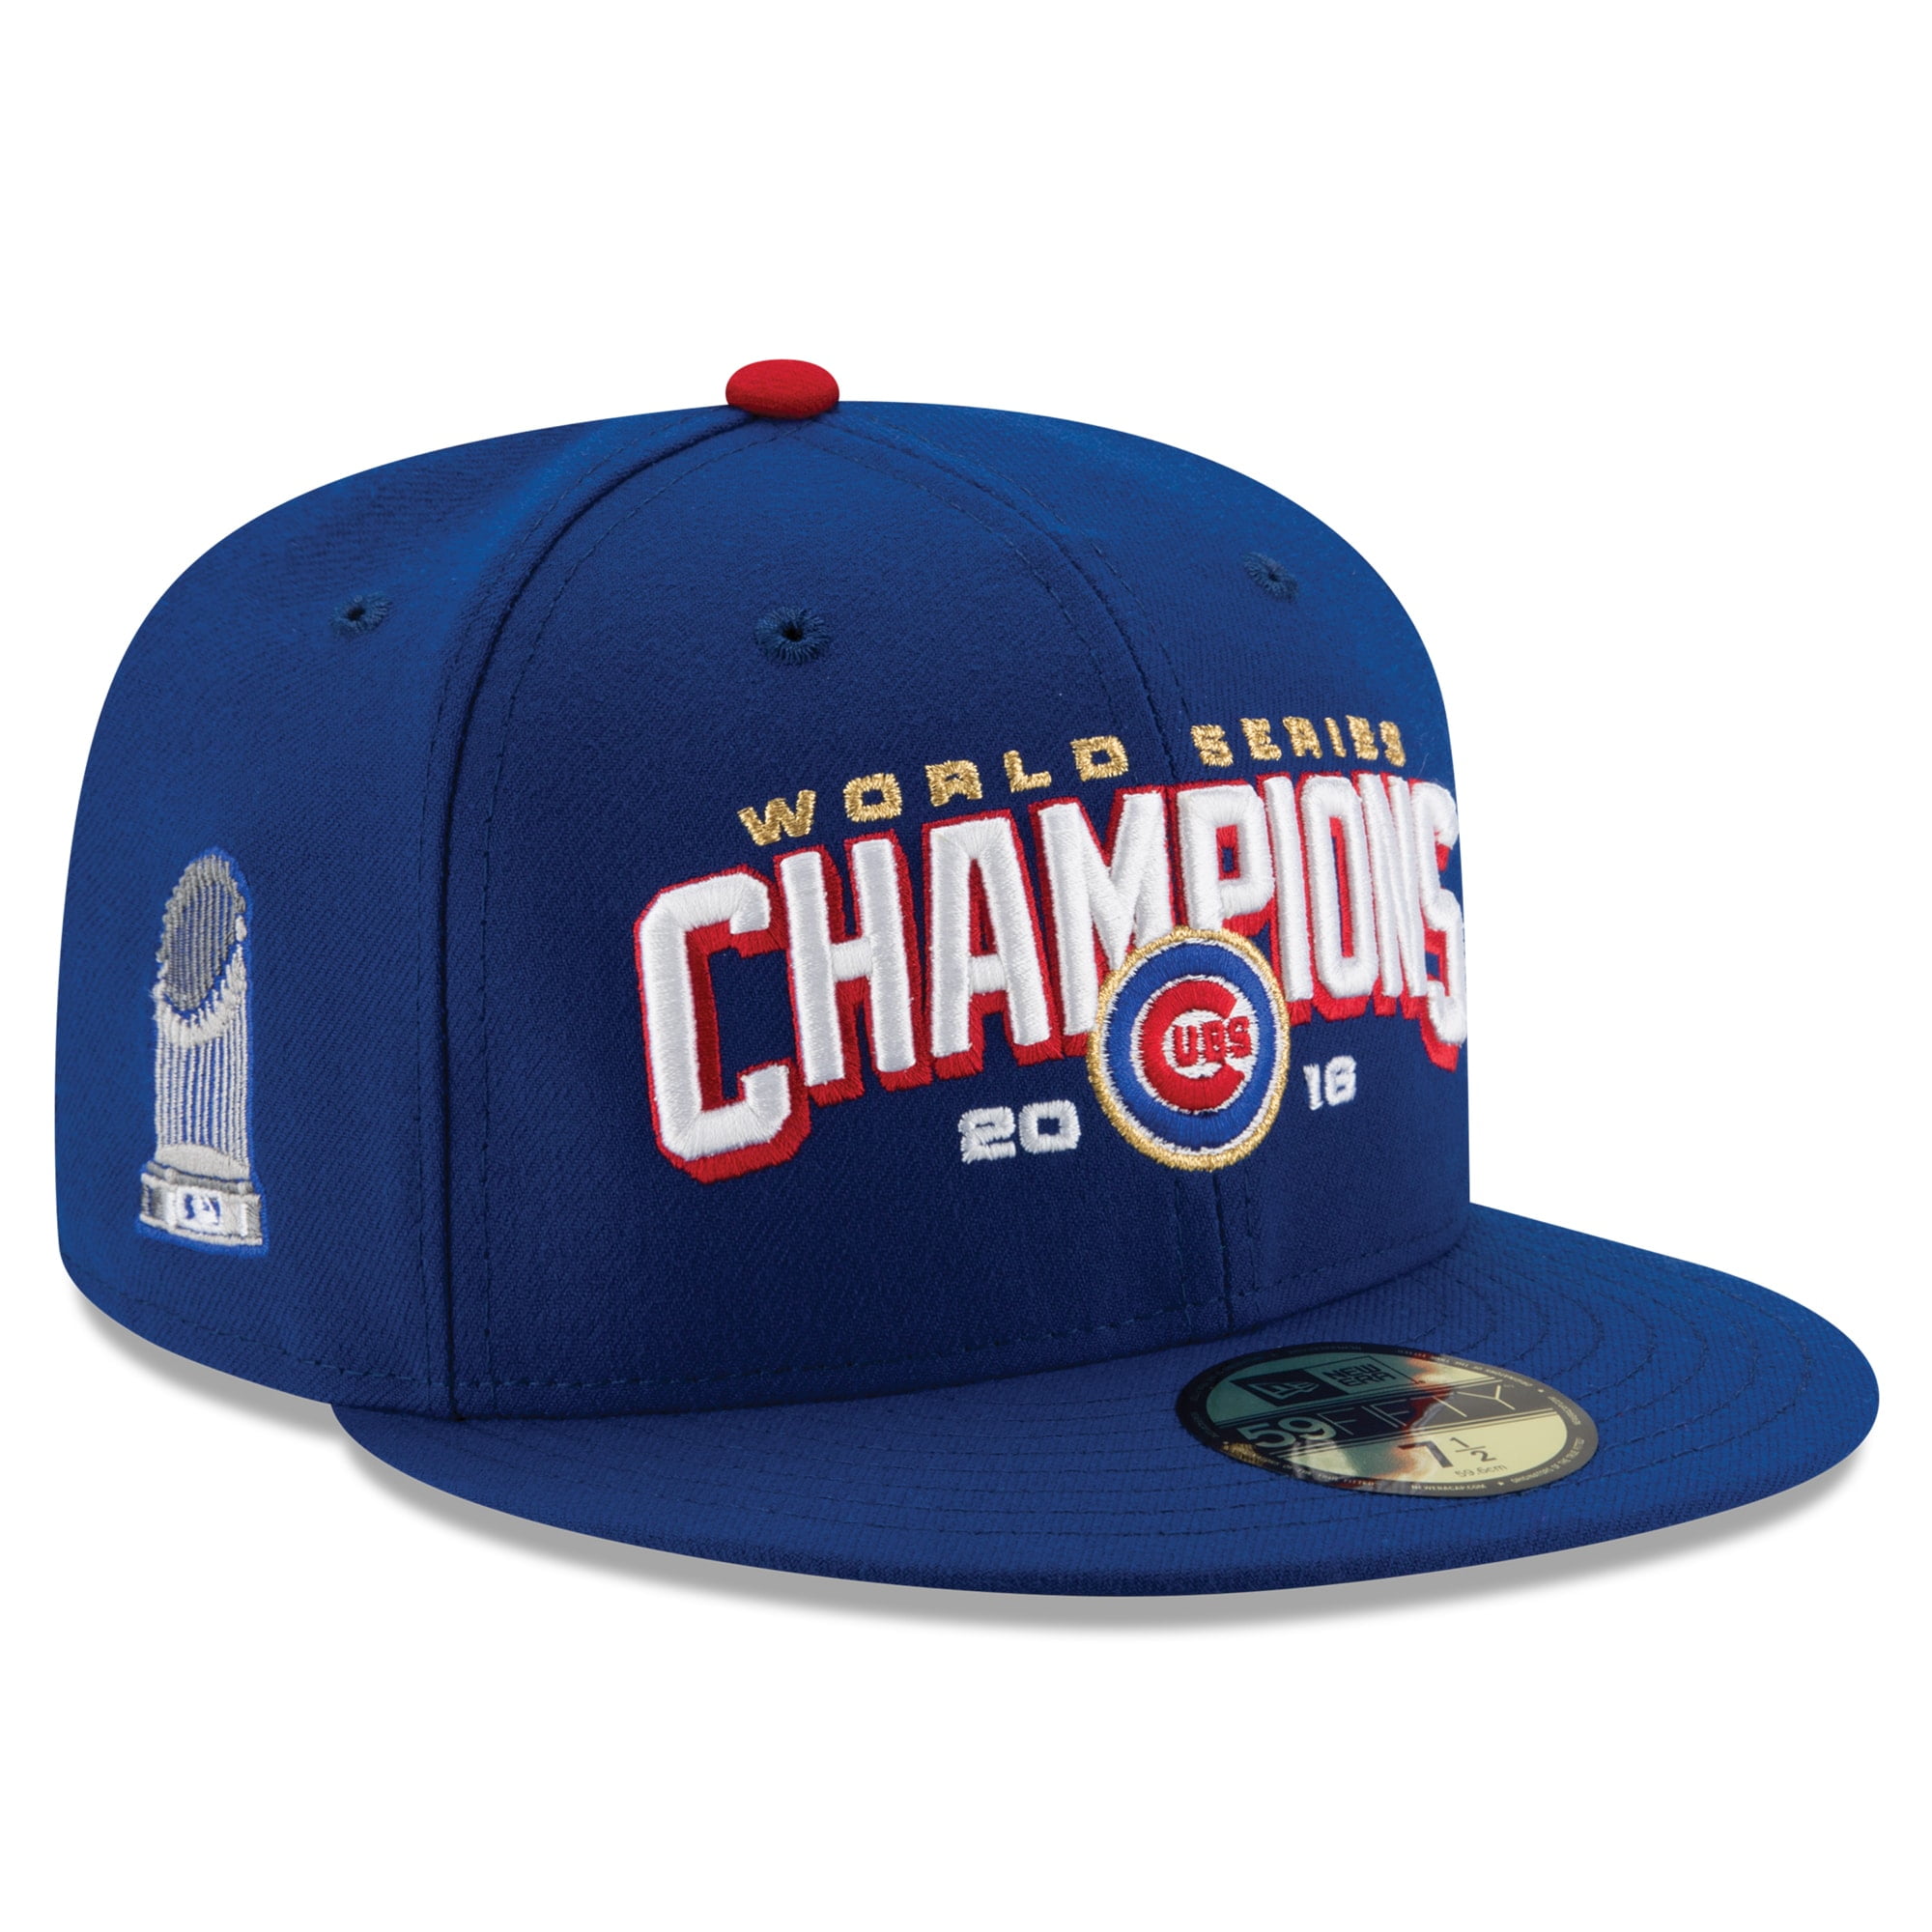 2016 world series baseball hats